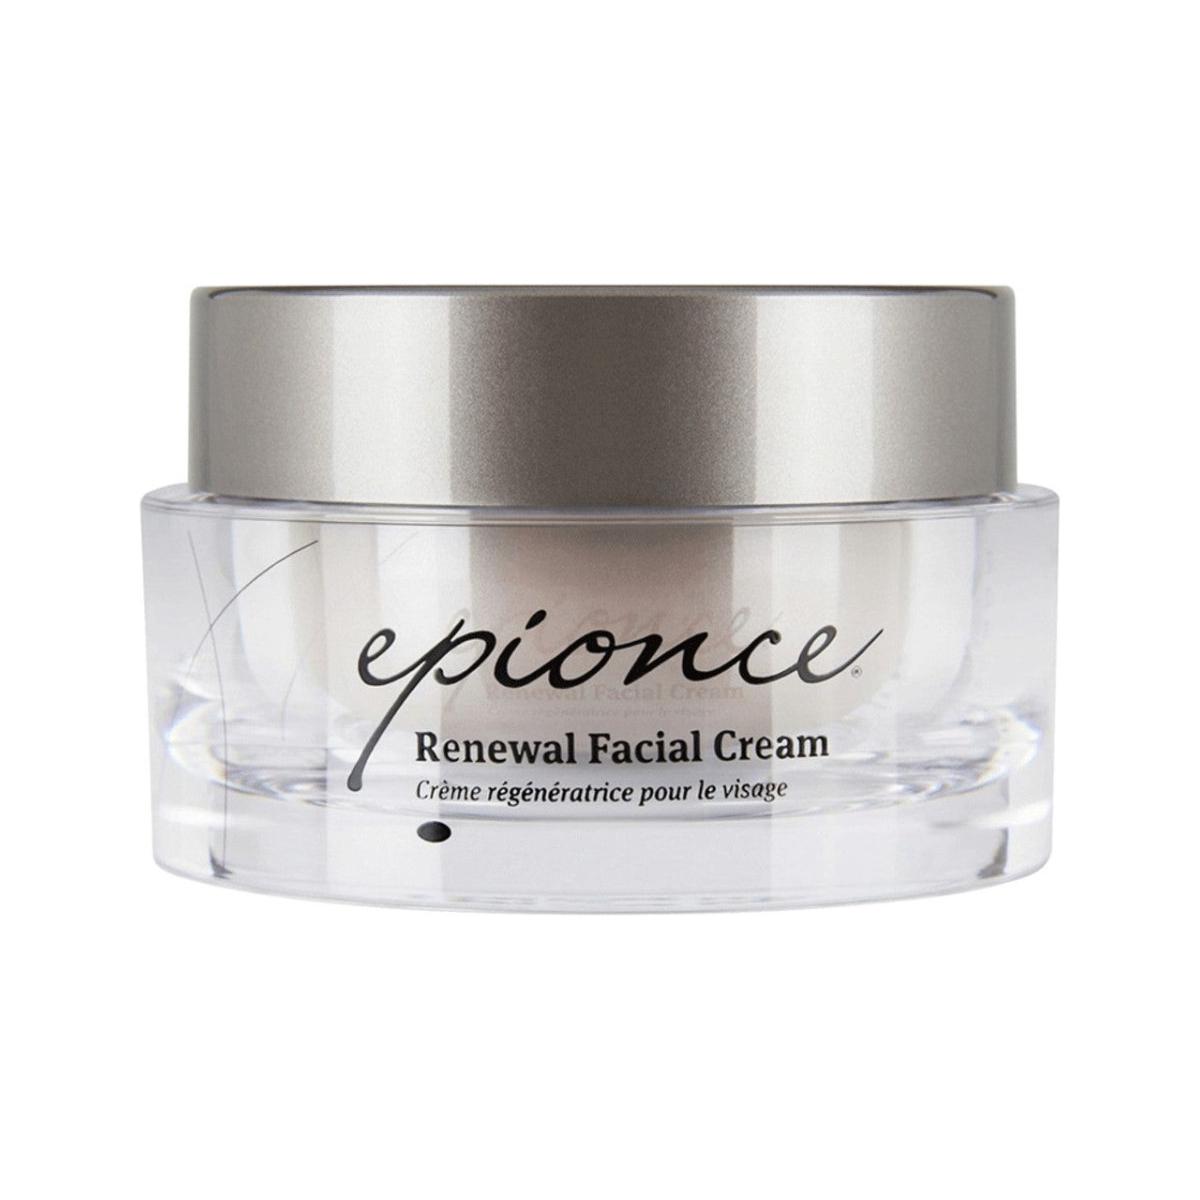 Epionce Renewal Facial Cream 50g - DG International Ventures Limited